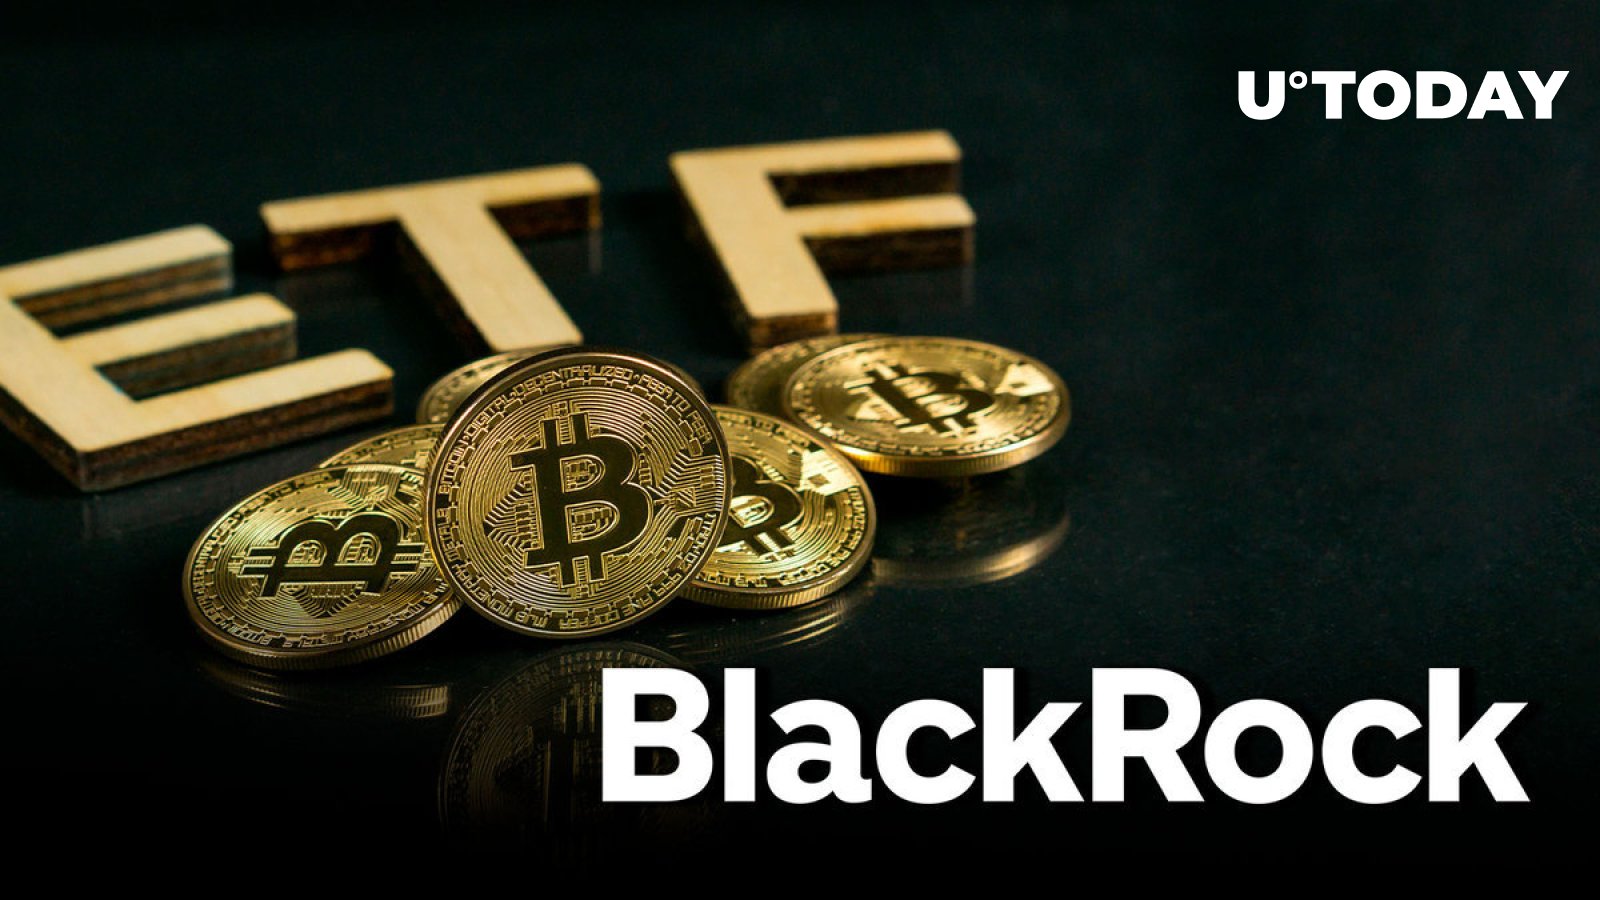 BlackRock Bitcoin ETF Acquires Massive Bitcoin Transfer from Coinbase